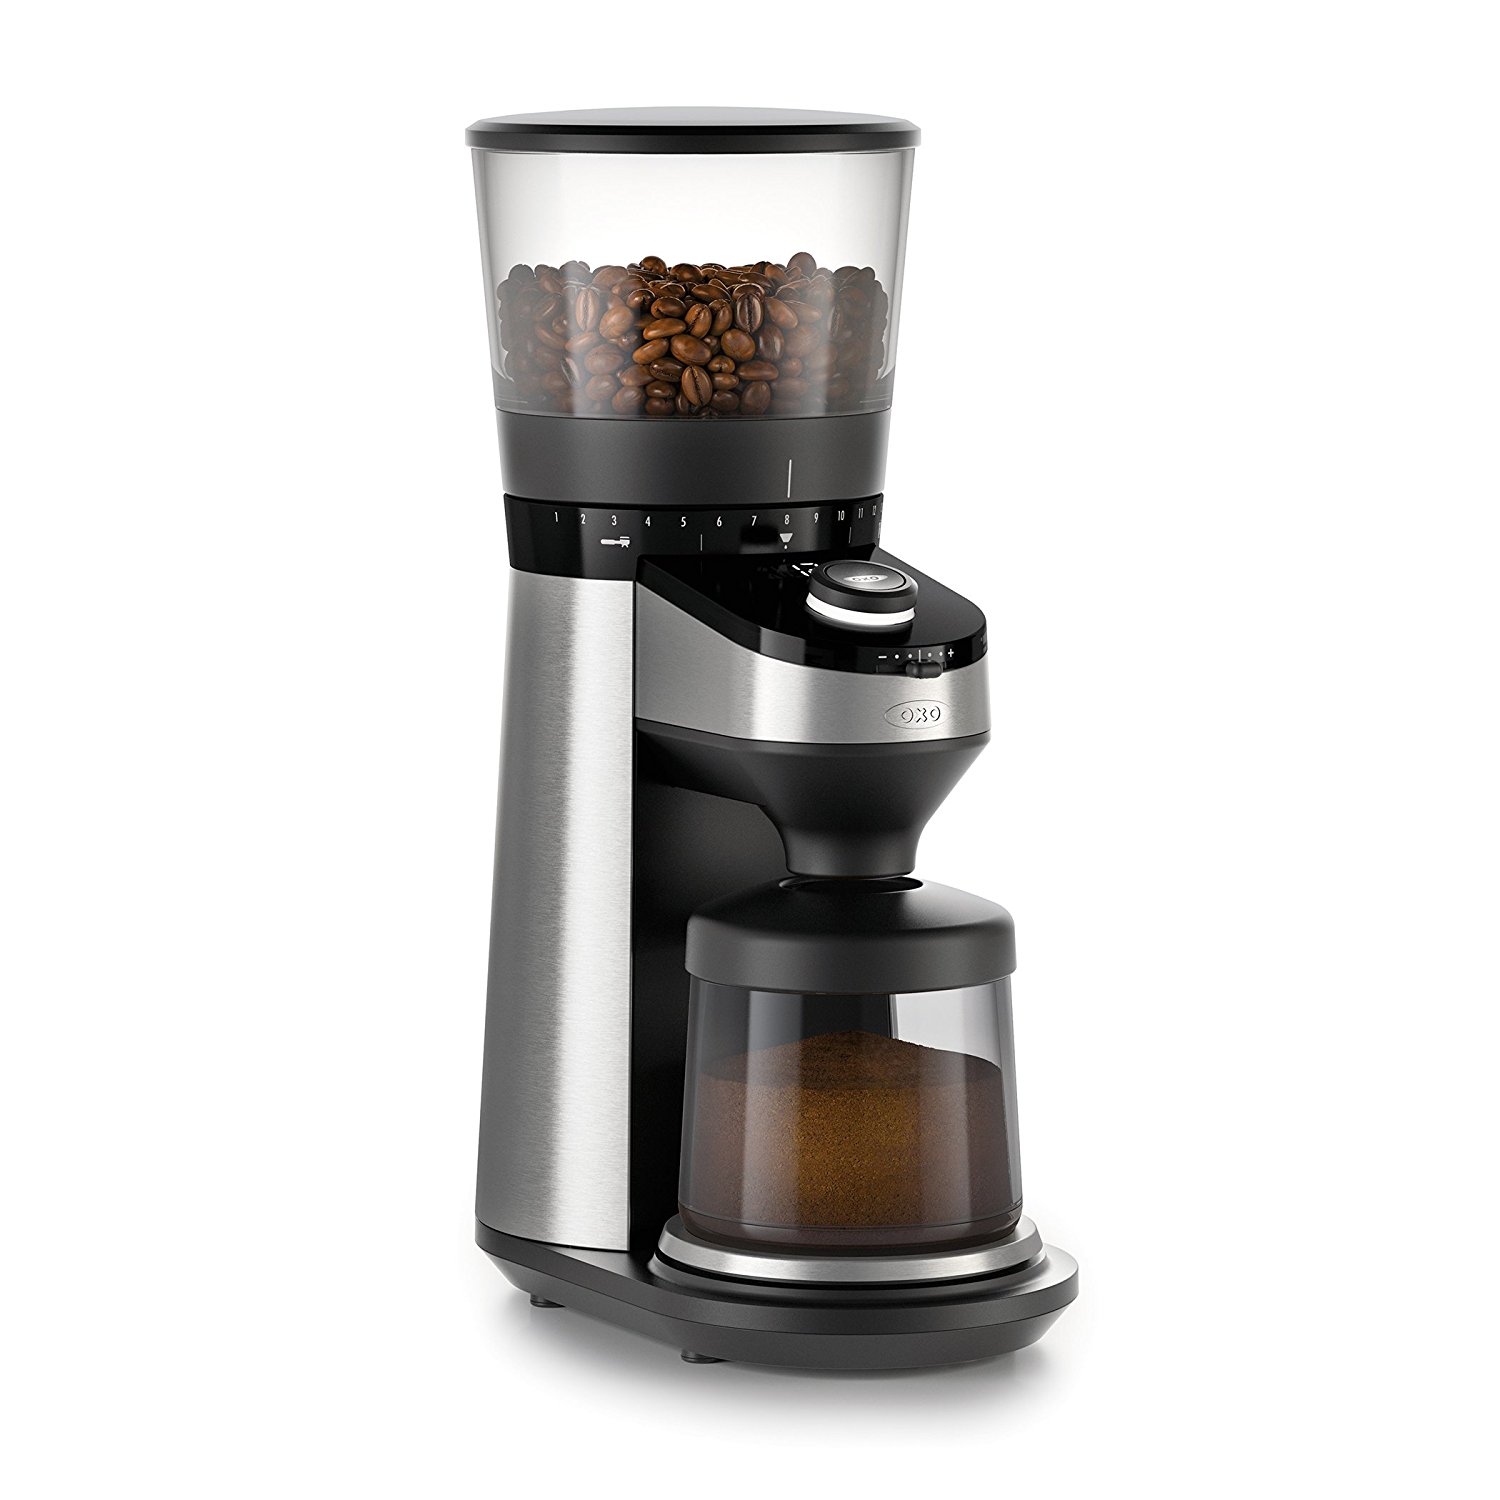 Coffee grinder photo